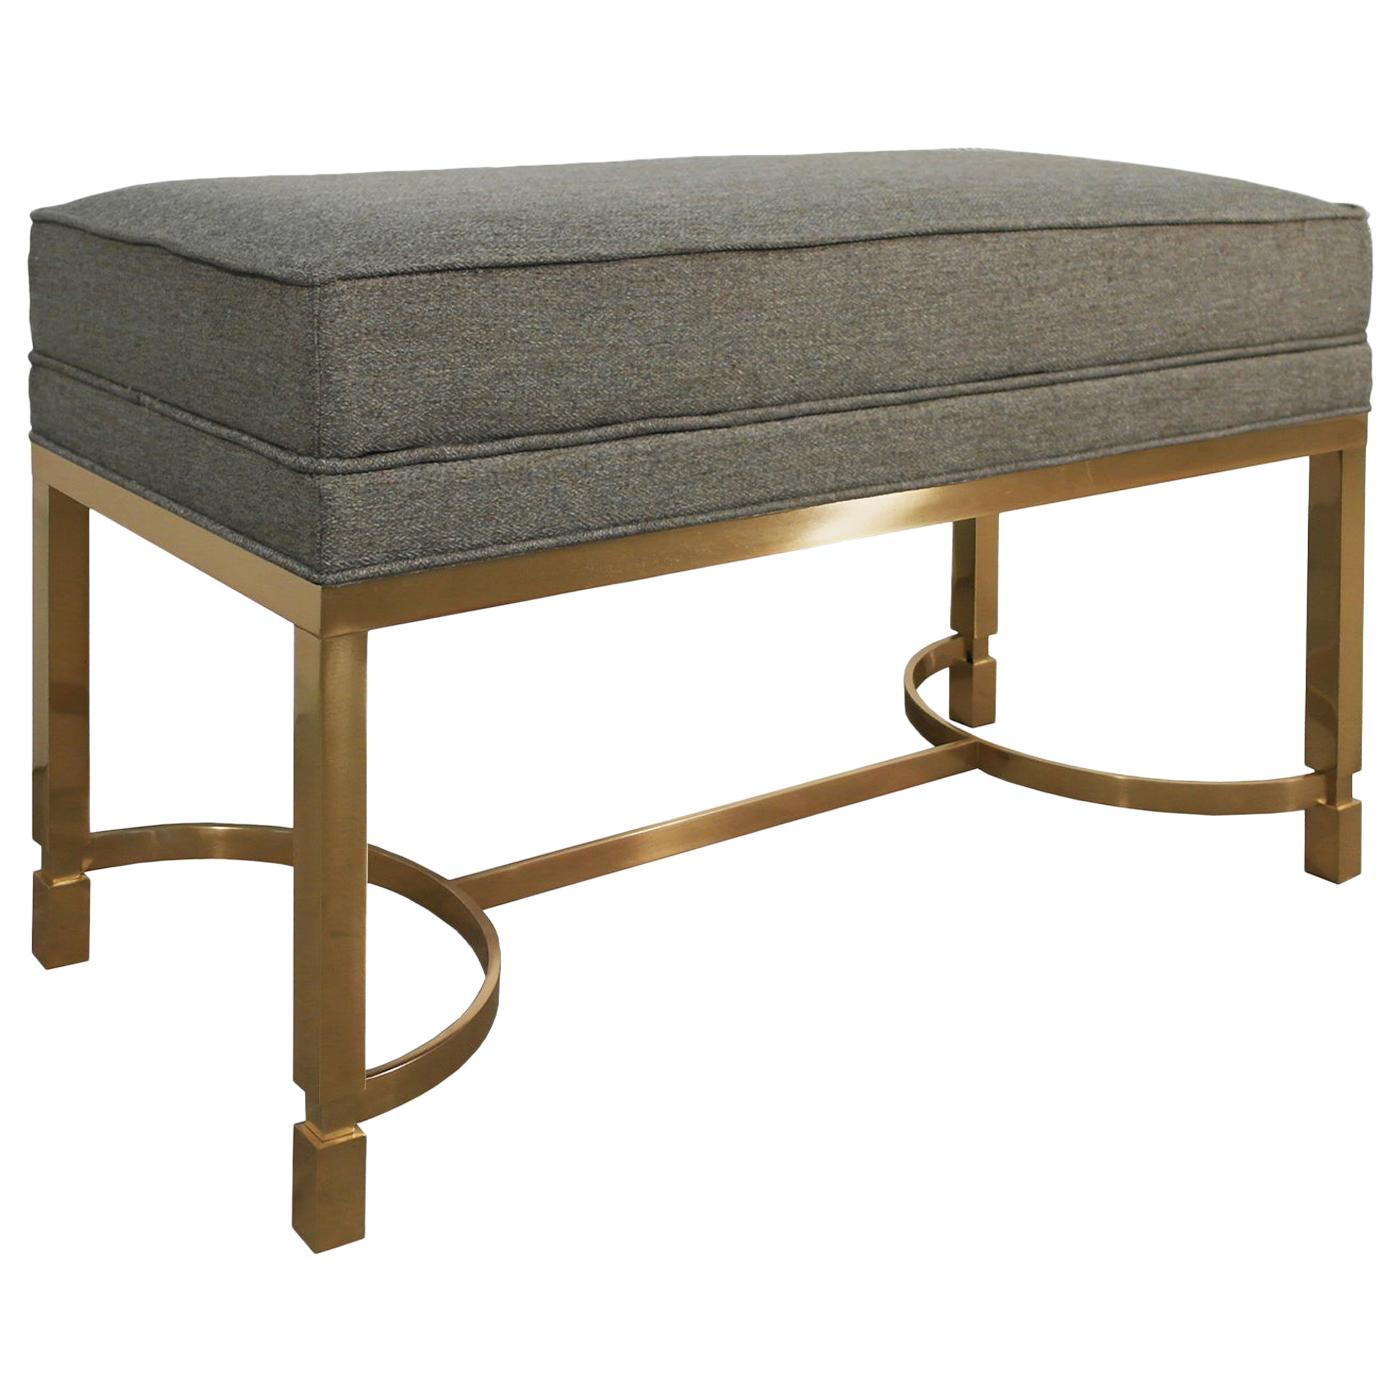 Plain Upholstered Bench For Sale